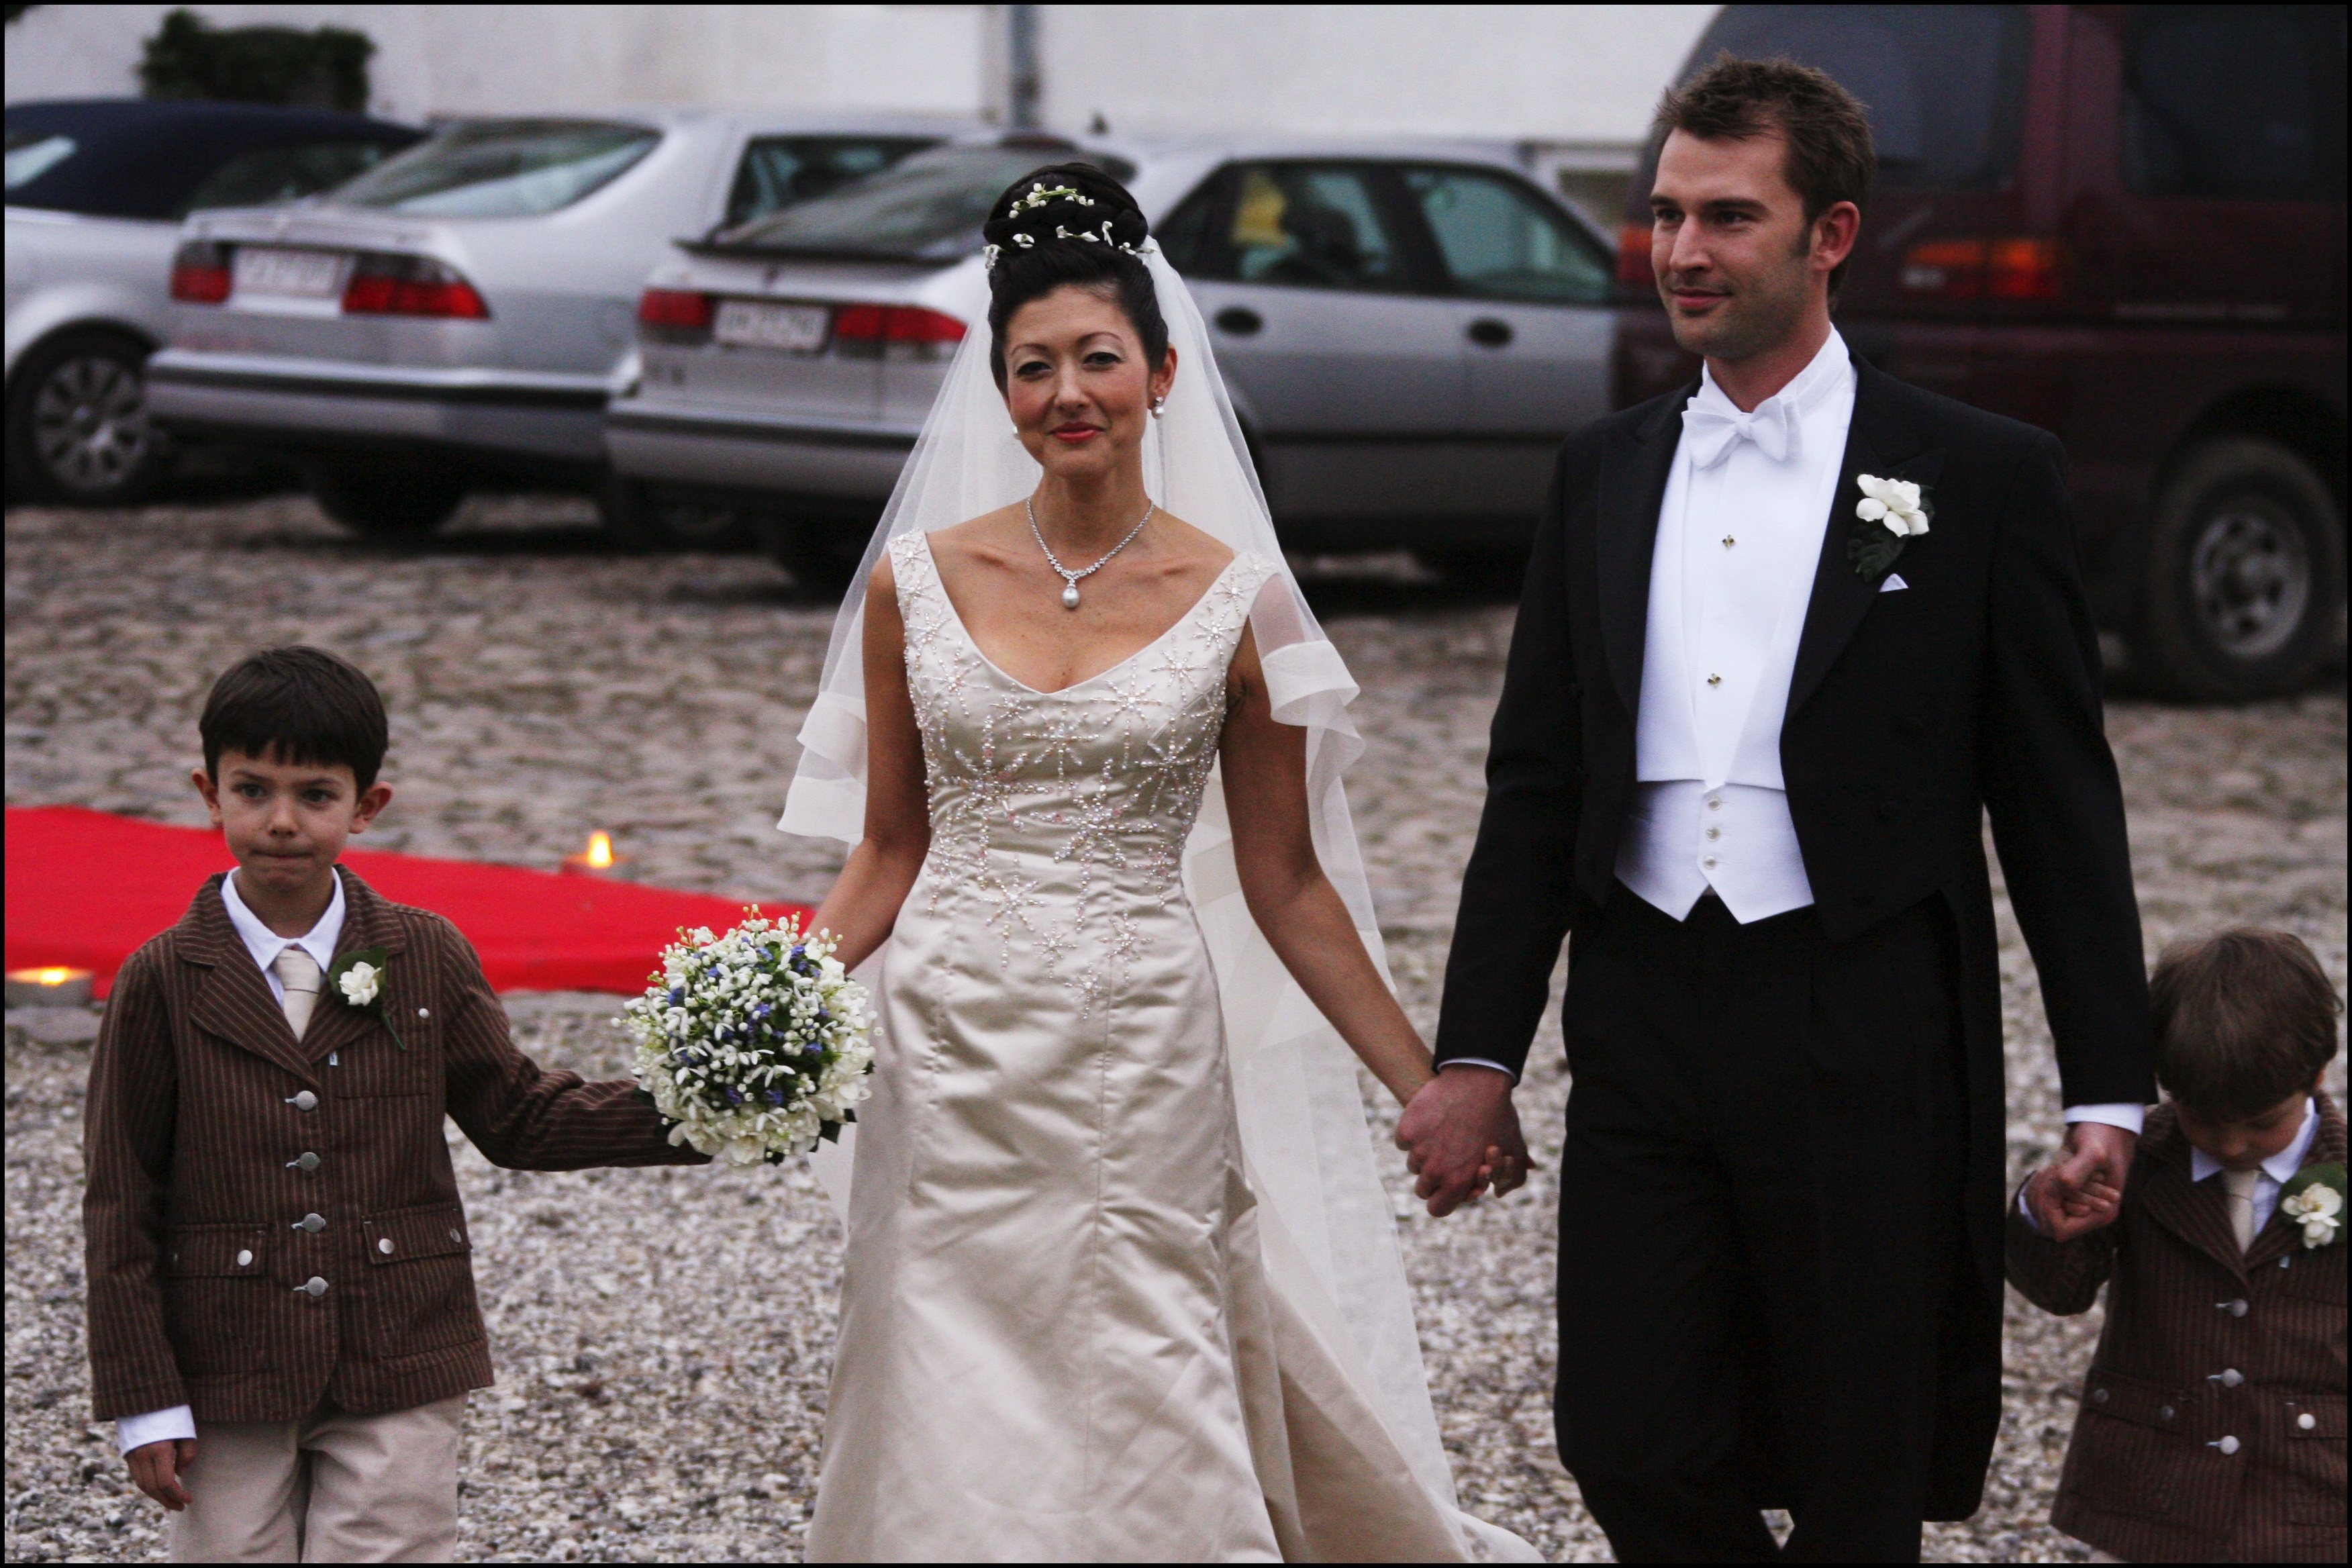 Wedding Of Princess Alexandra Of Denmark And Martin Joergensen in Fakse, Denmark on March 03, 2007.